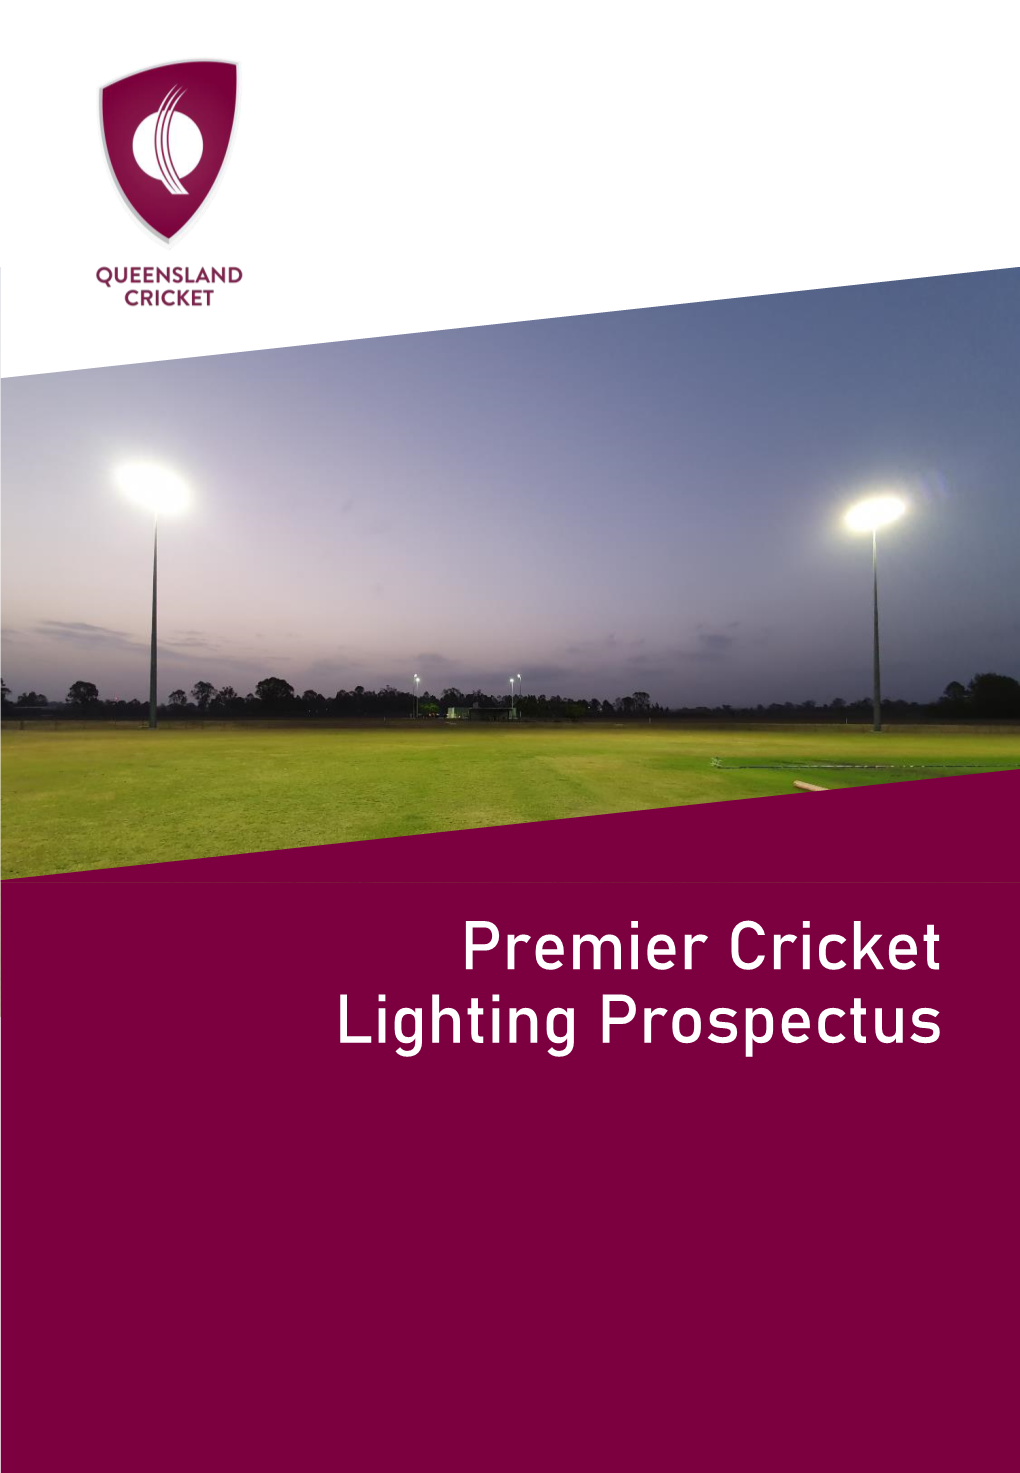 Premier Cricket Lighting Prospectus Contents